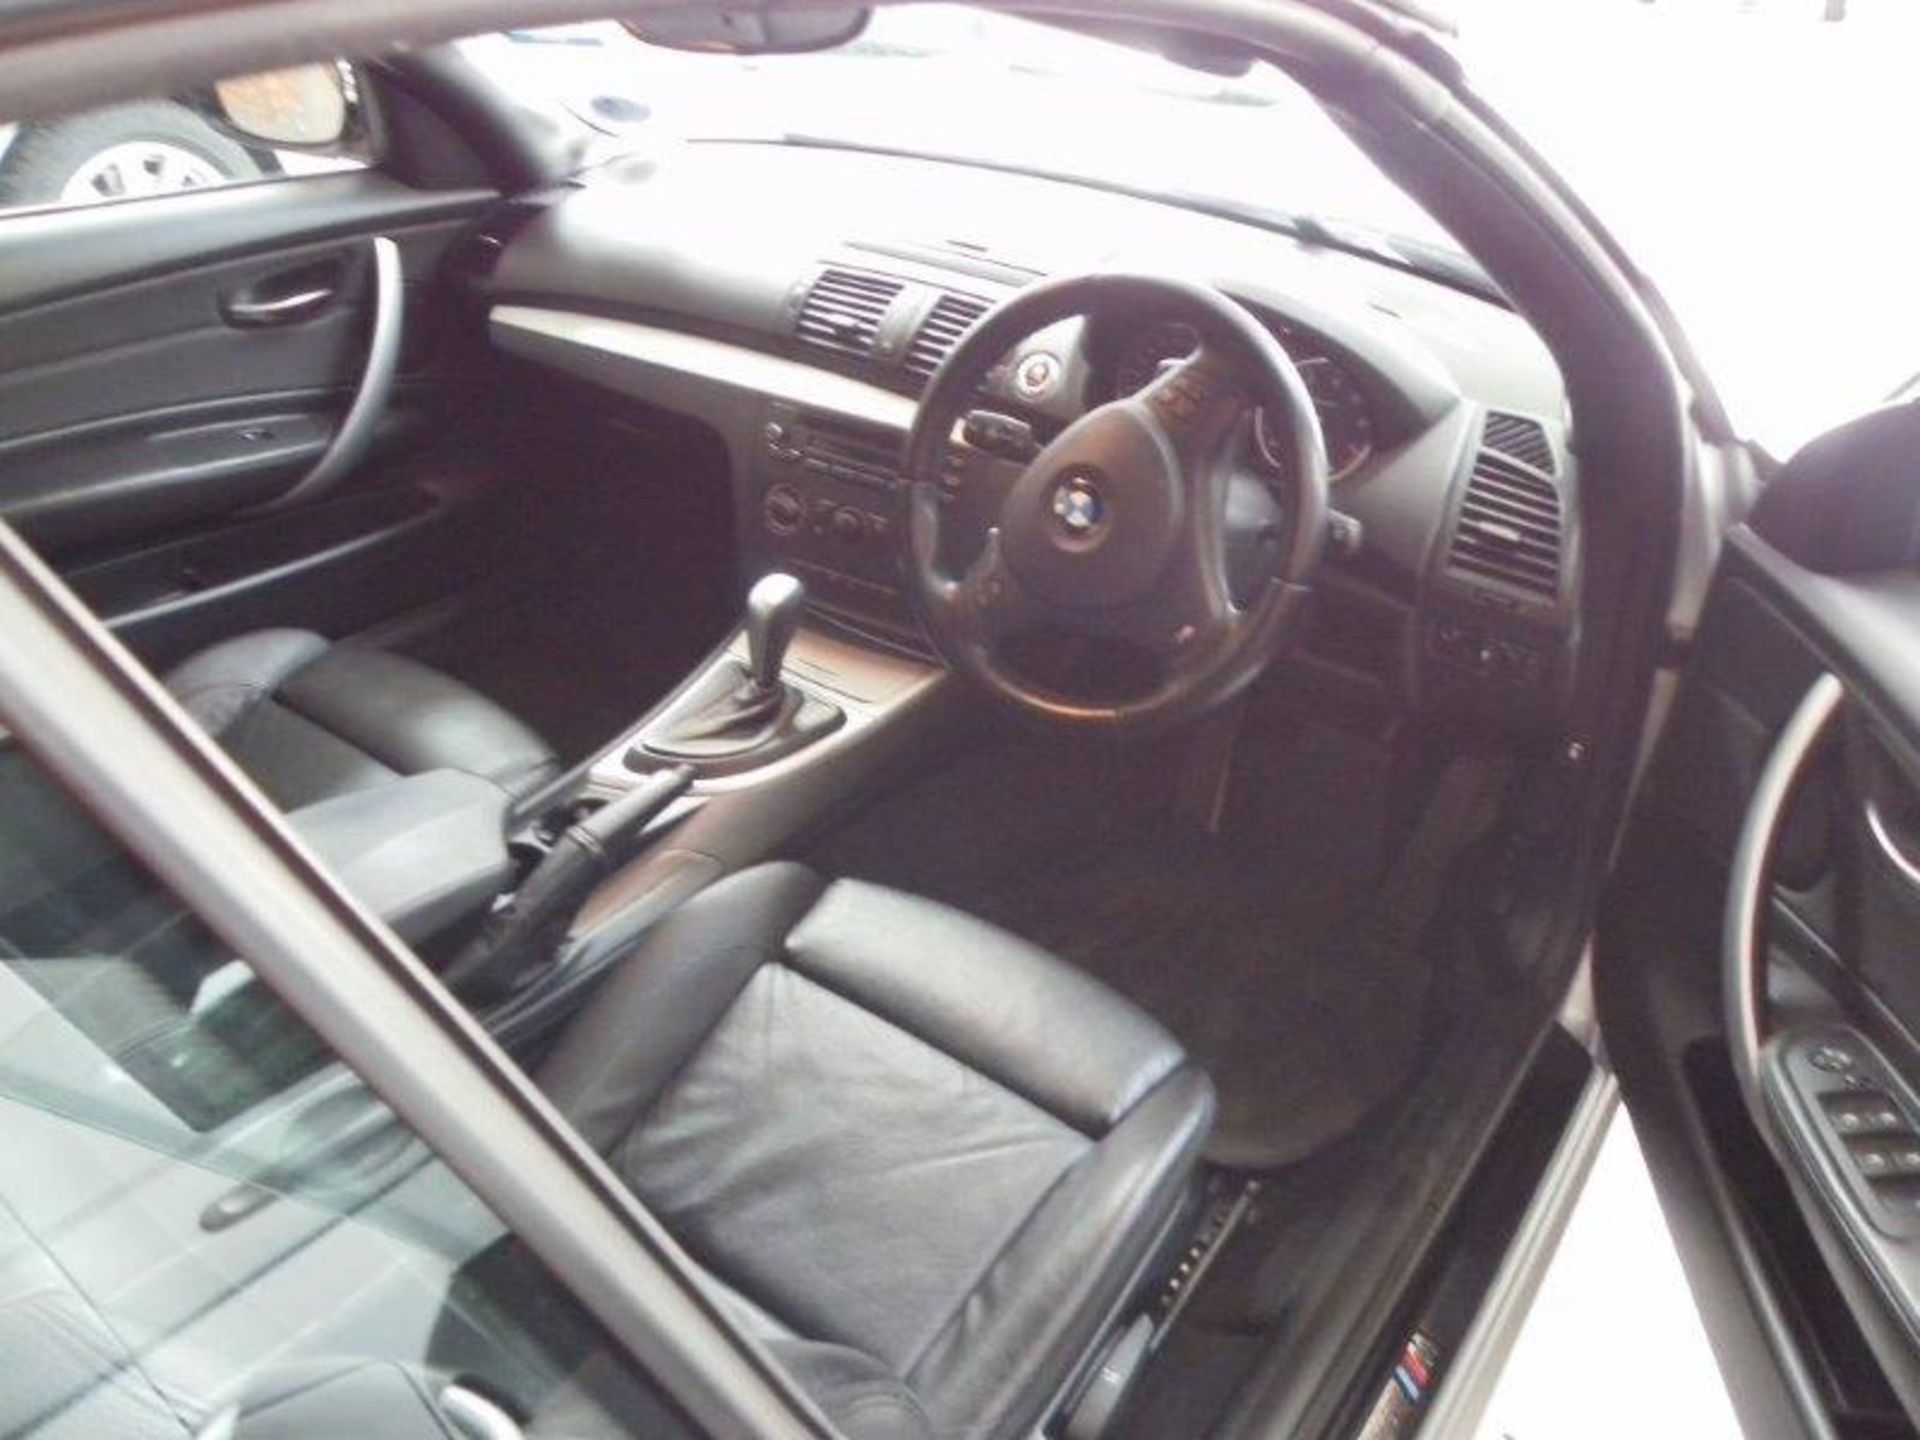 2011 BG81JXGP BMW 125i Convertible Auto (Vin No: WBAUL92040VL01168 )(Silver)(76 480 kms) Black - Image 2 of 7